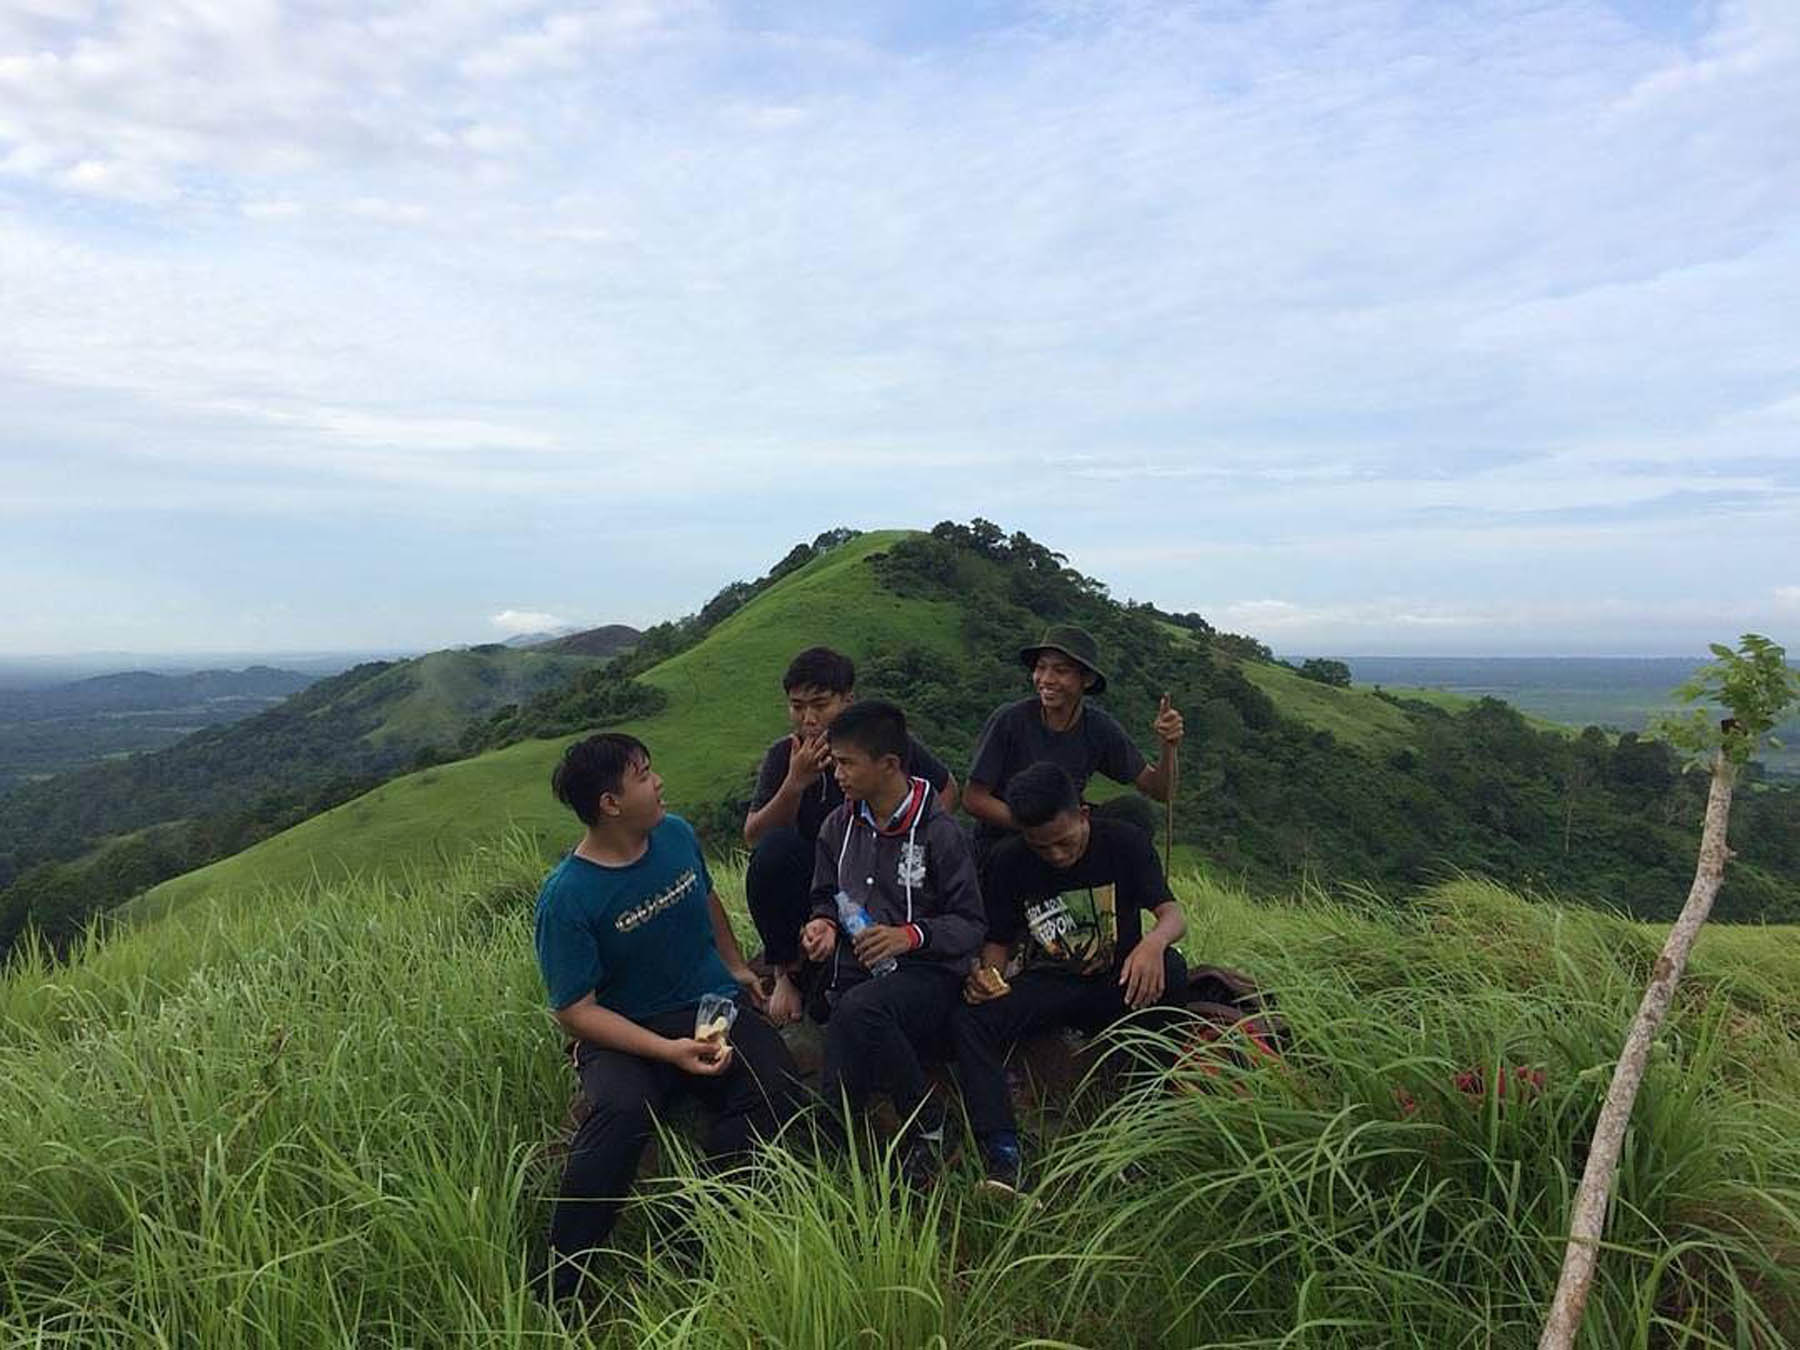 Melakukan swafoto bersama kawan di atas bukit 